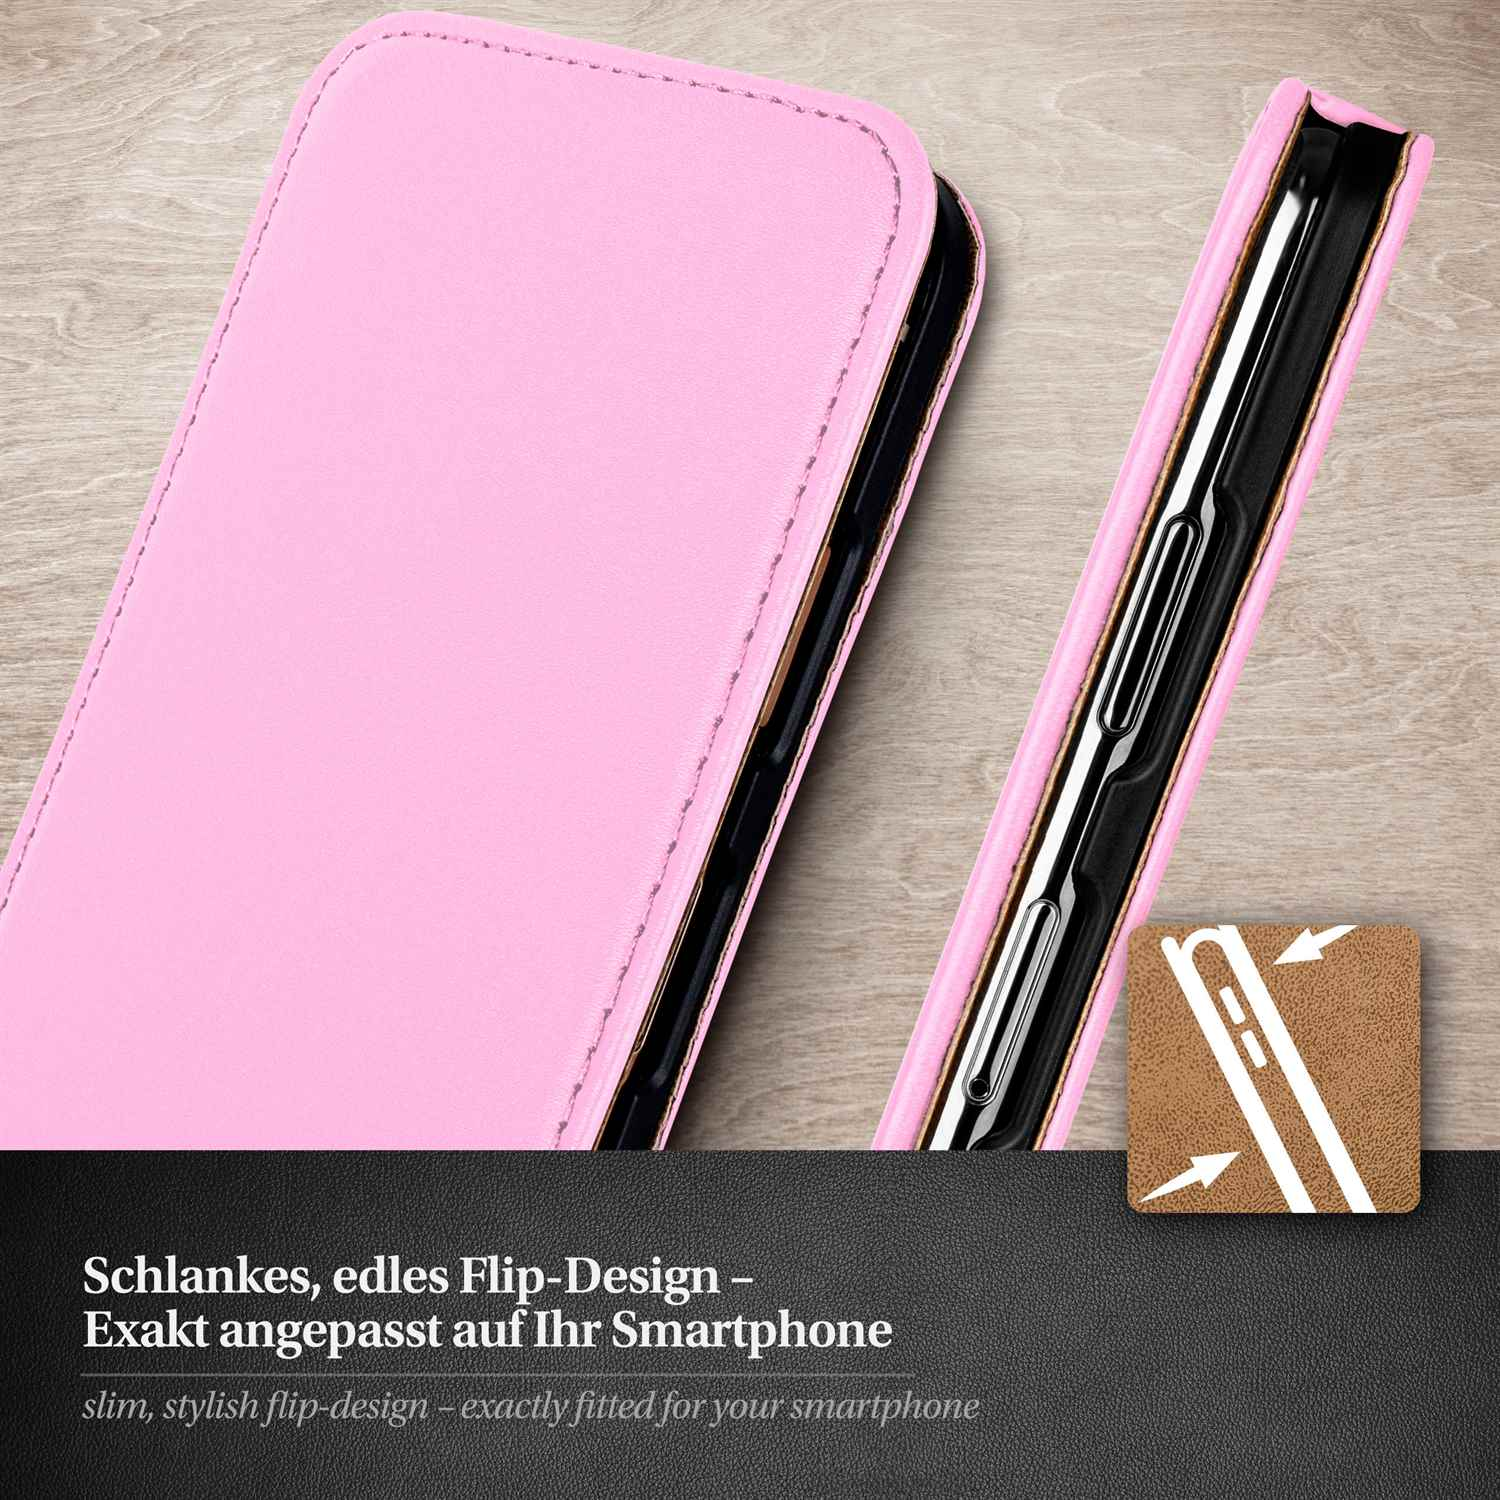 Cover, Flip Flip 520, Icy-Pink MOEX Nokia, Case, Lumia